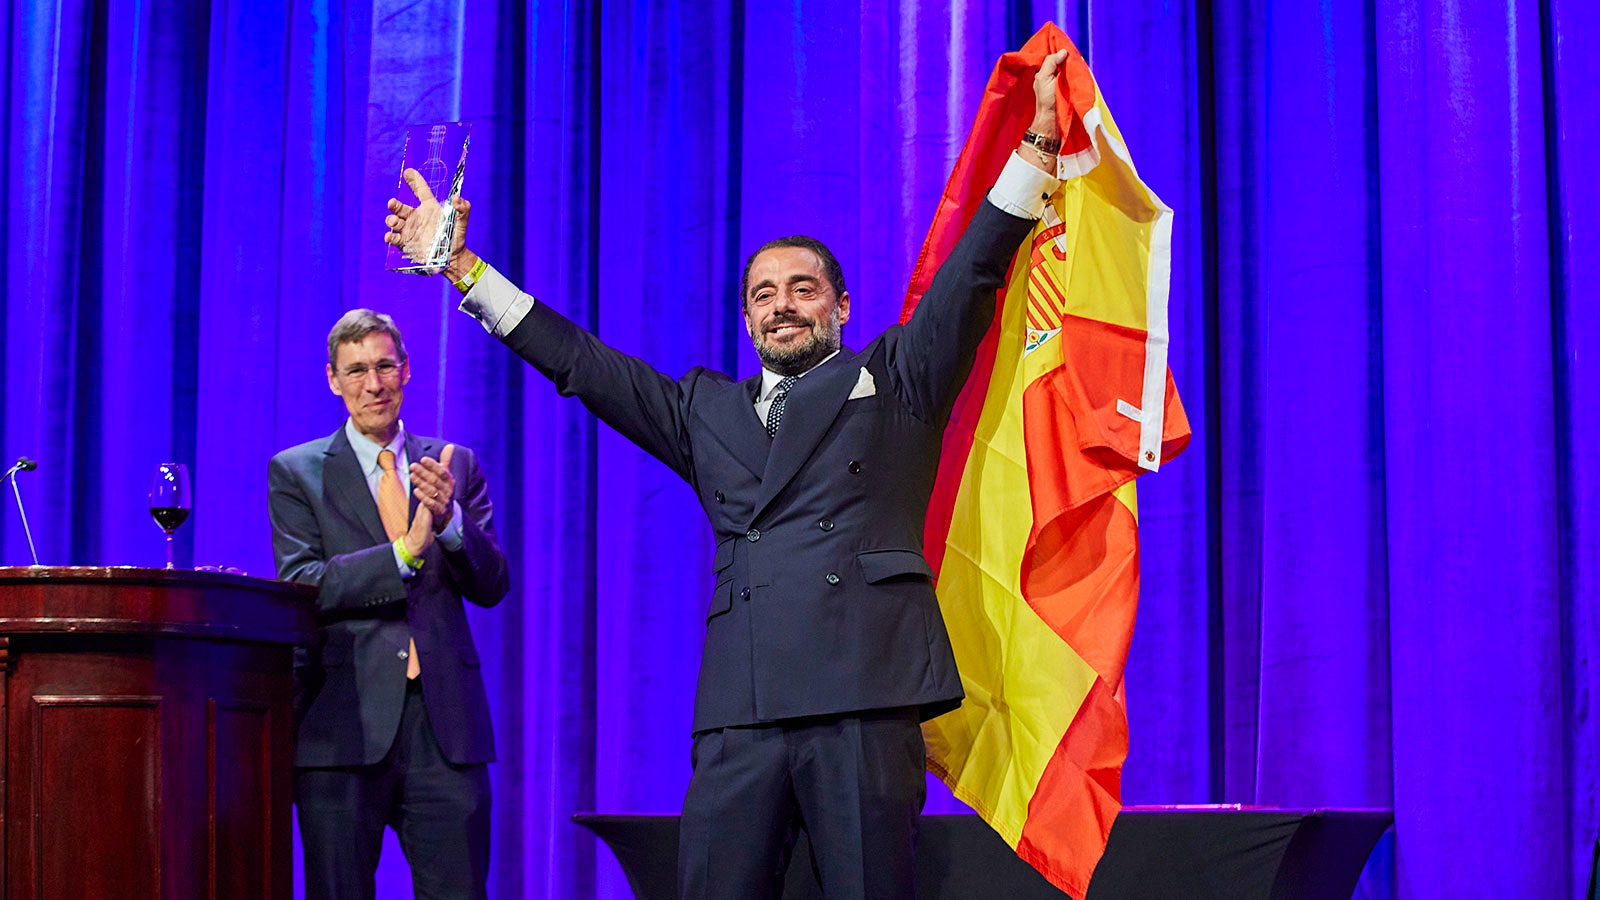  Vicente Dalmau Cebrián-Sagarriga holding the Spanish flag and accepting the 2020 Wine of the Year award from former Wine Spectator executive editor Thomas Matthews 